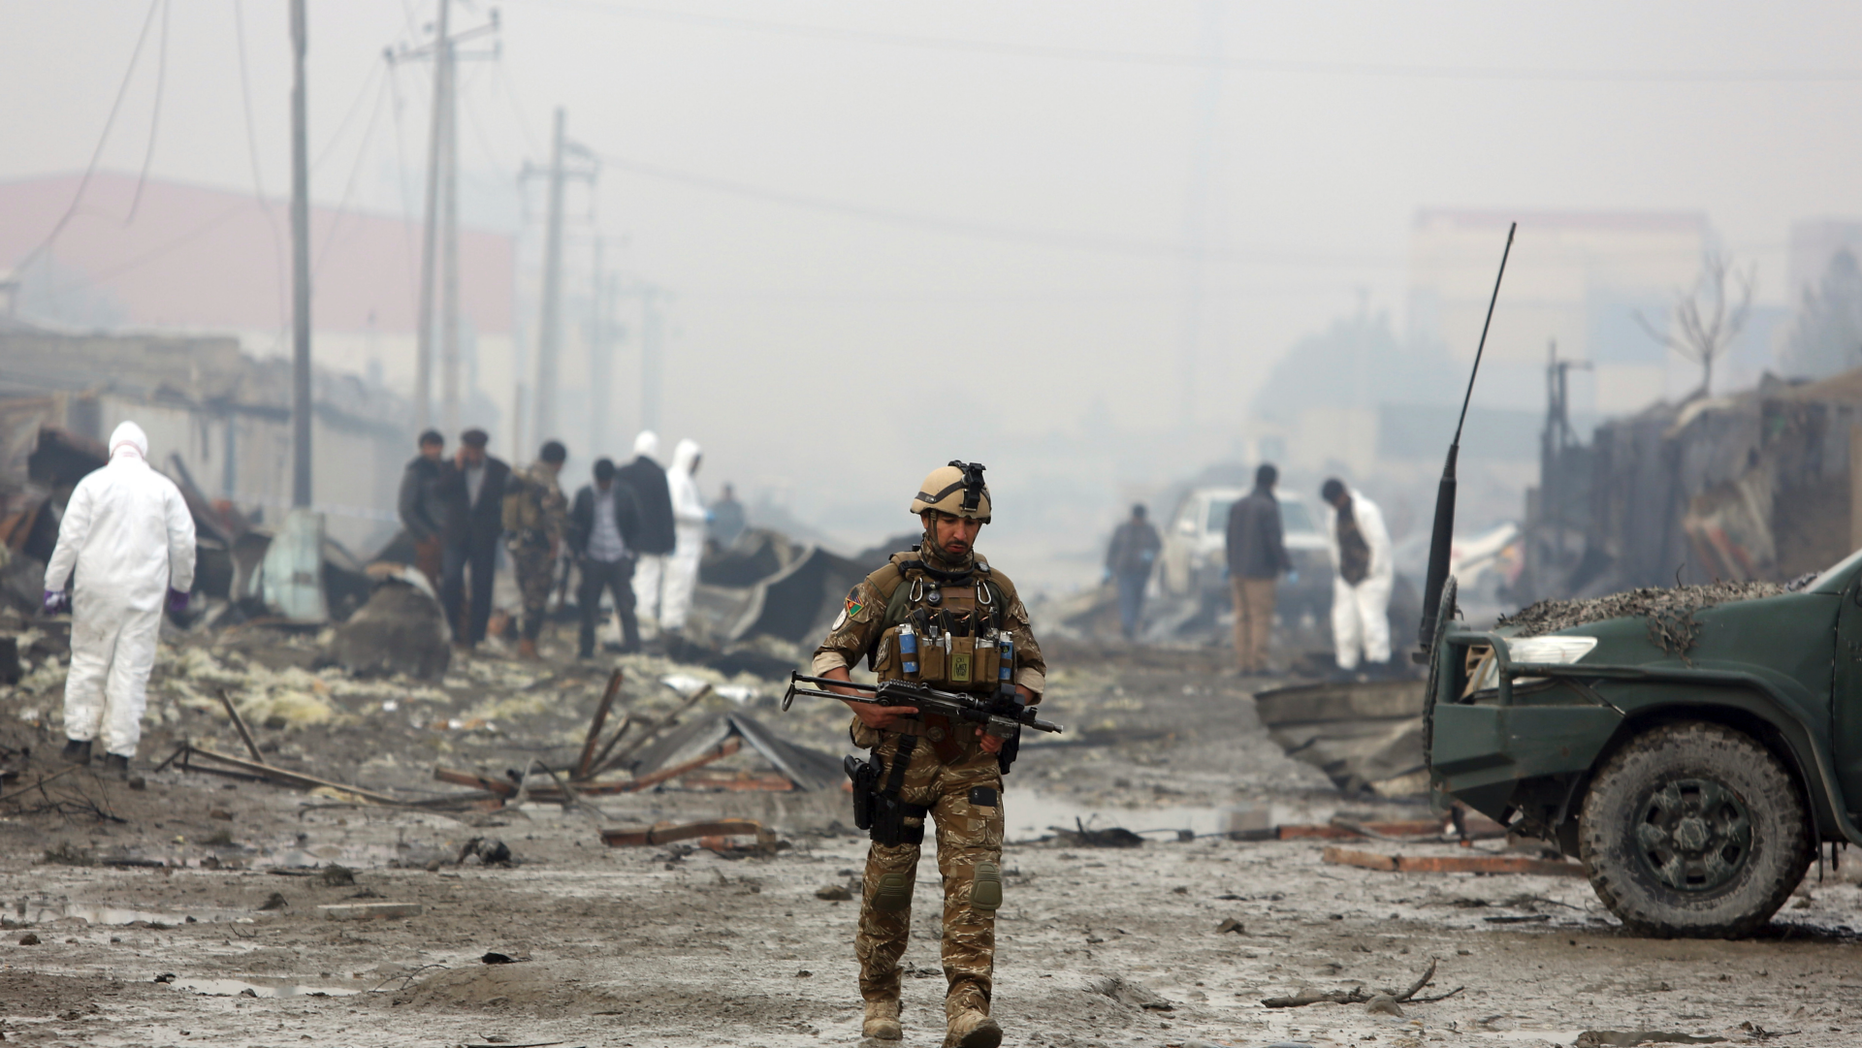 Картинки по запросу "afghanistan war"